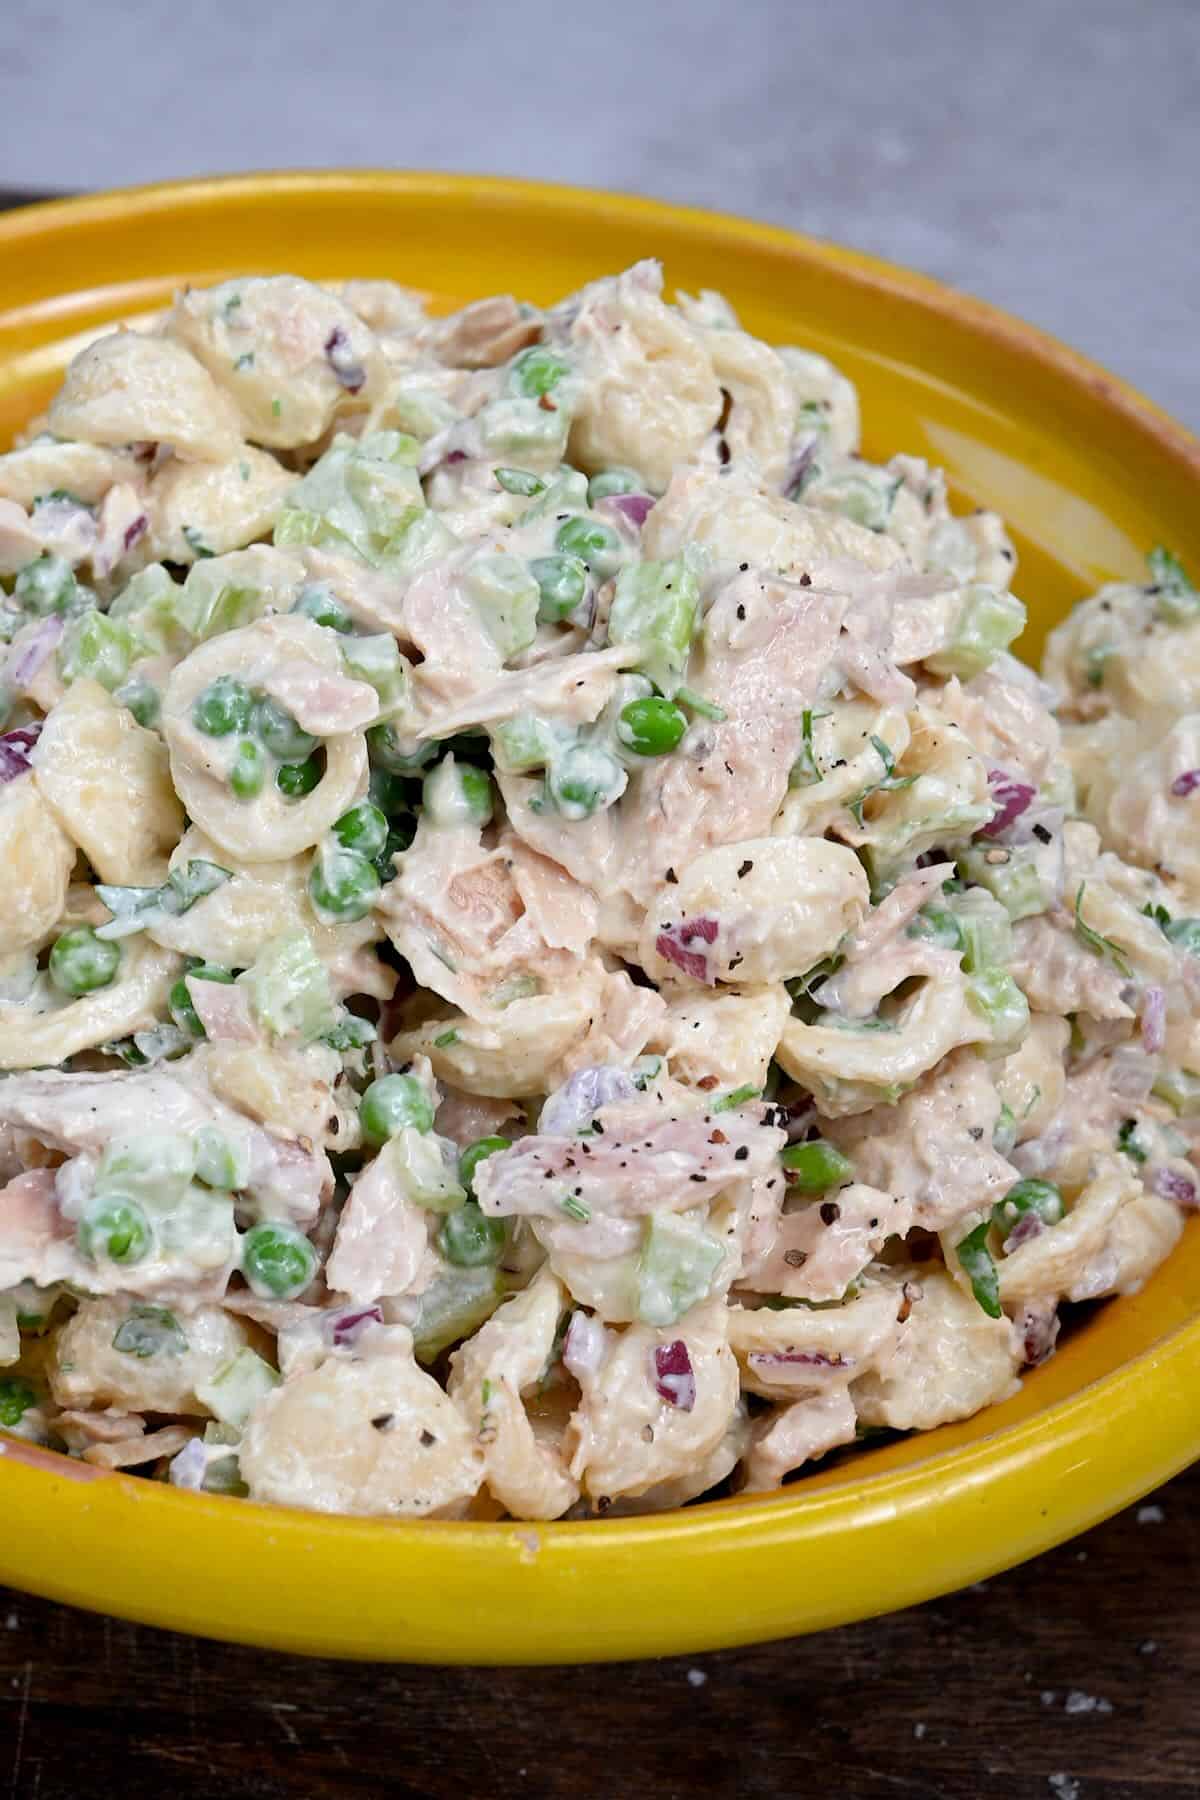 tuna pasta salad in a yellow plate